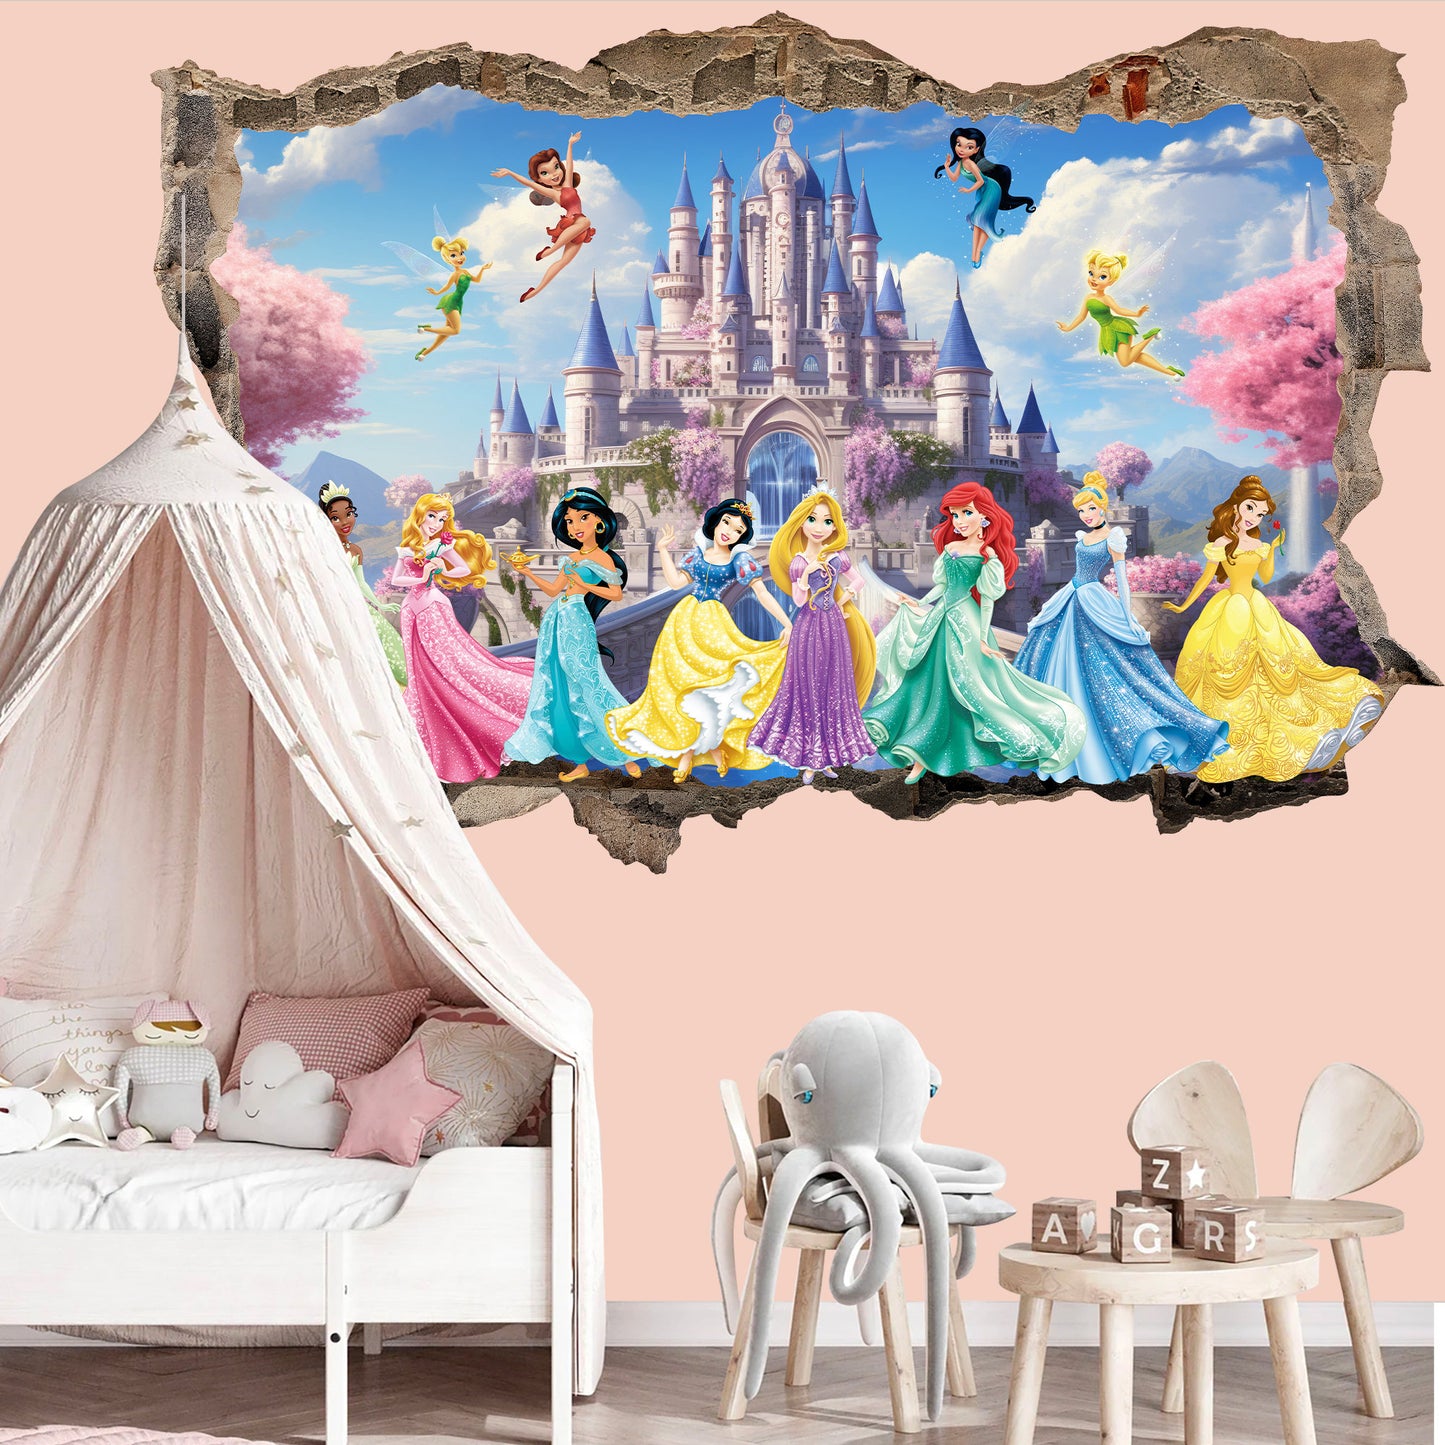 3D Princess Castle Wall Decal - Seven Beautiful Princesses, Four Fairy Florals, Room Decor - BW018